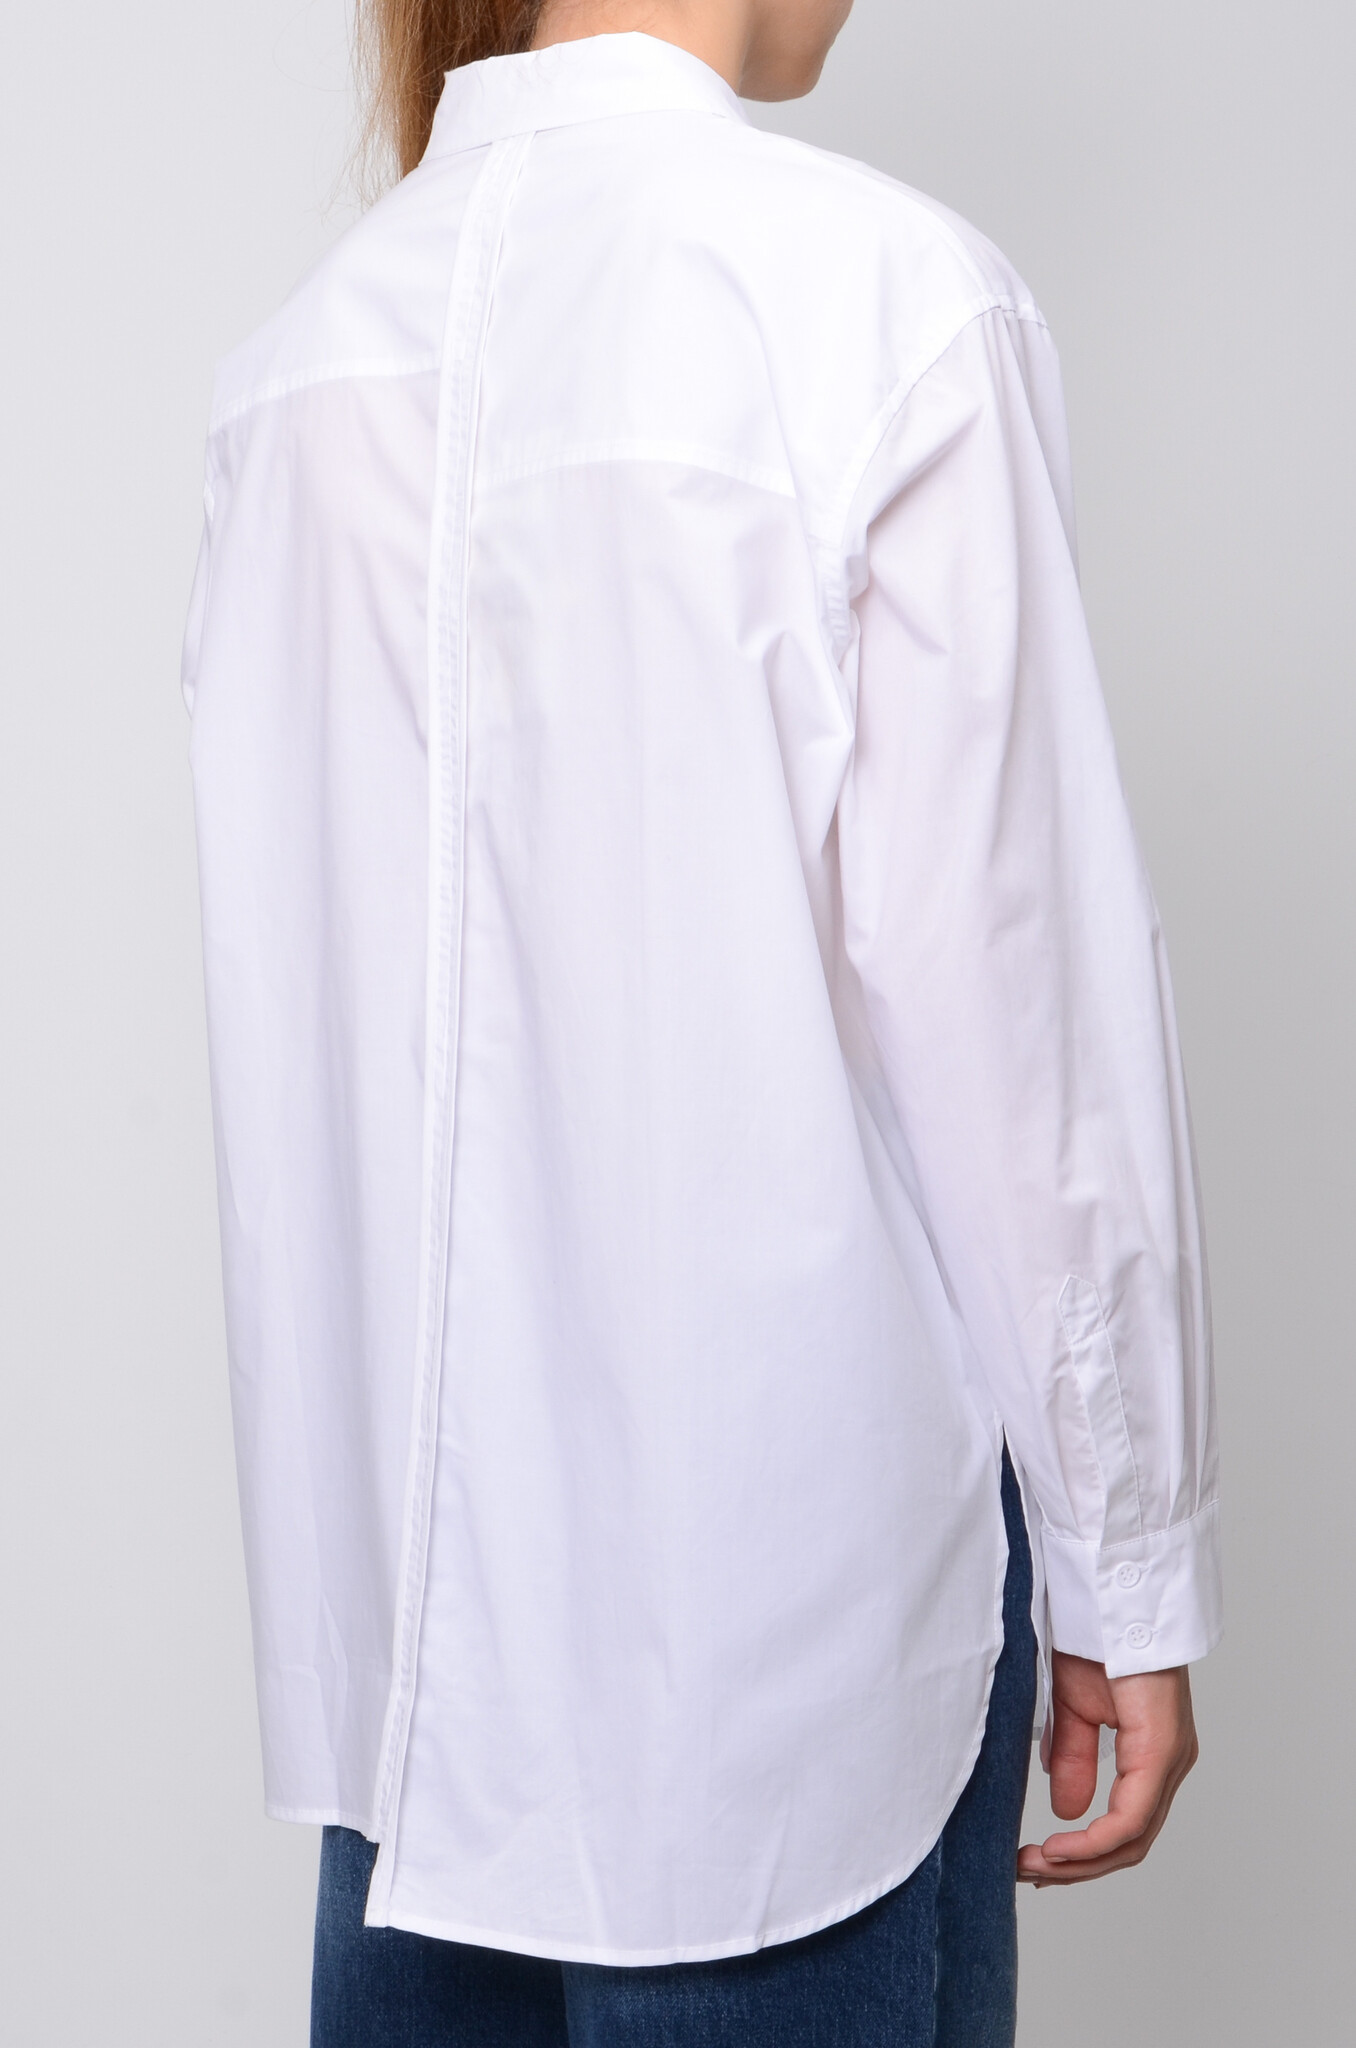 Molli Shirt in Bright White-5